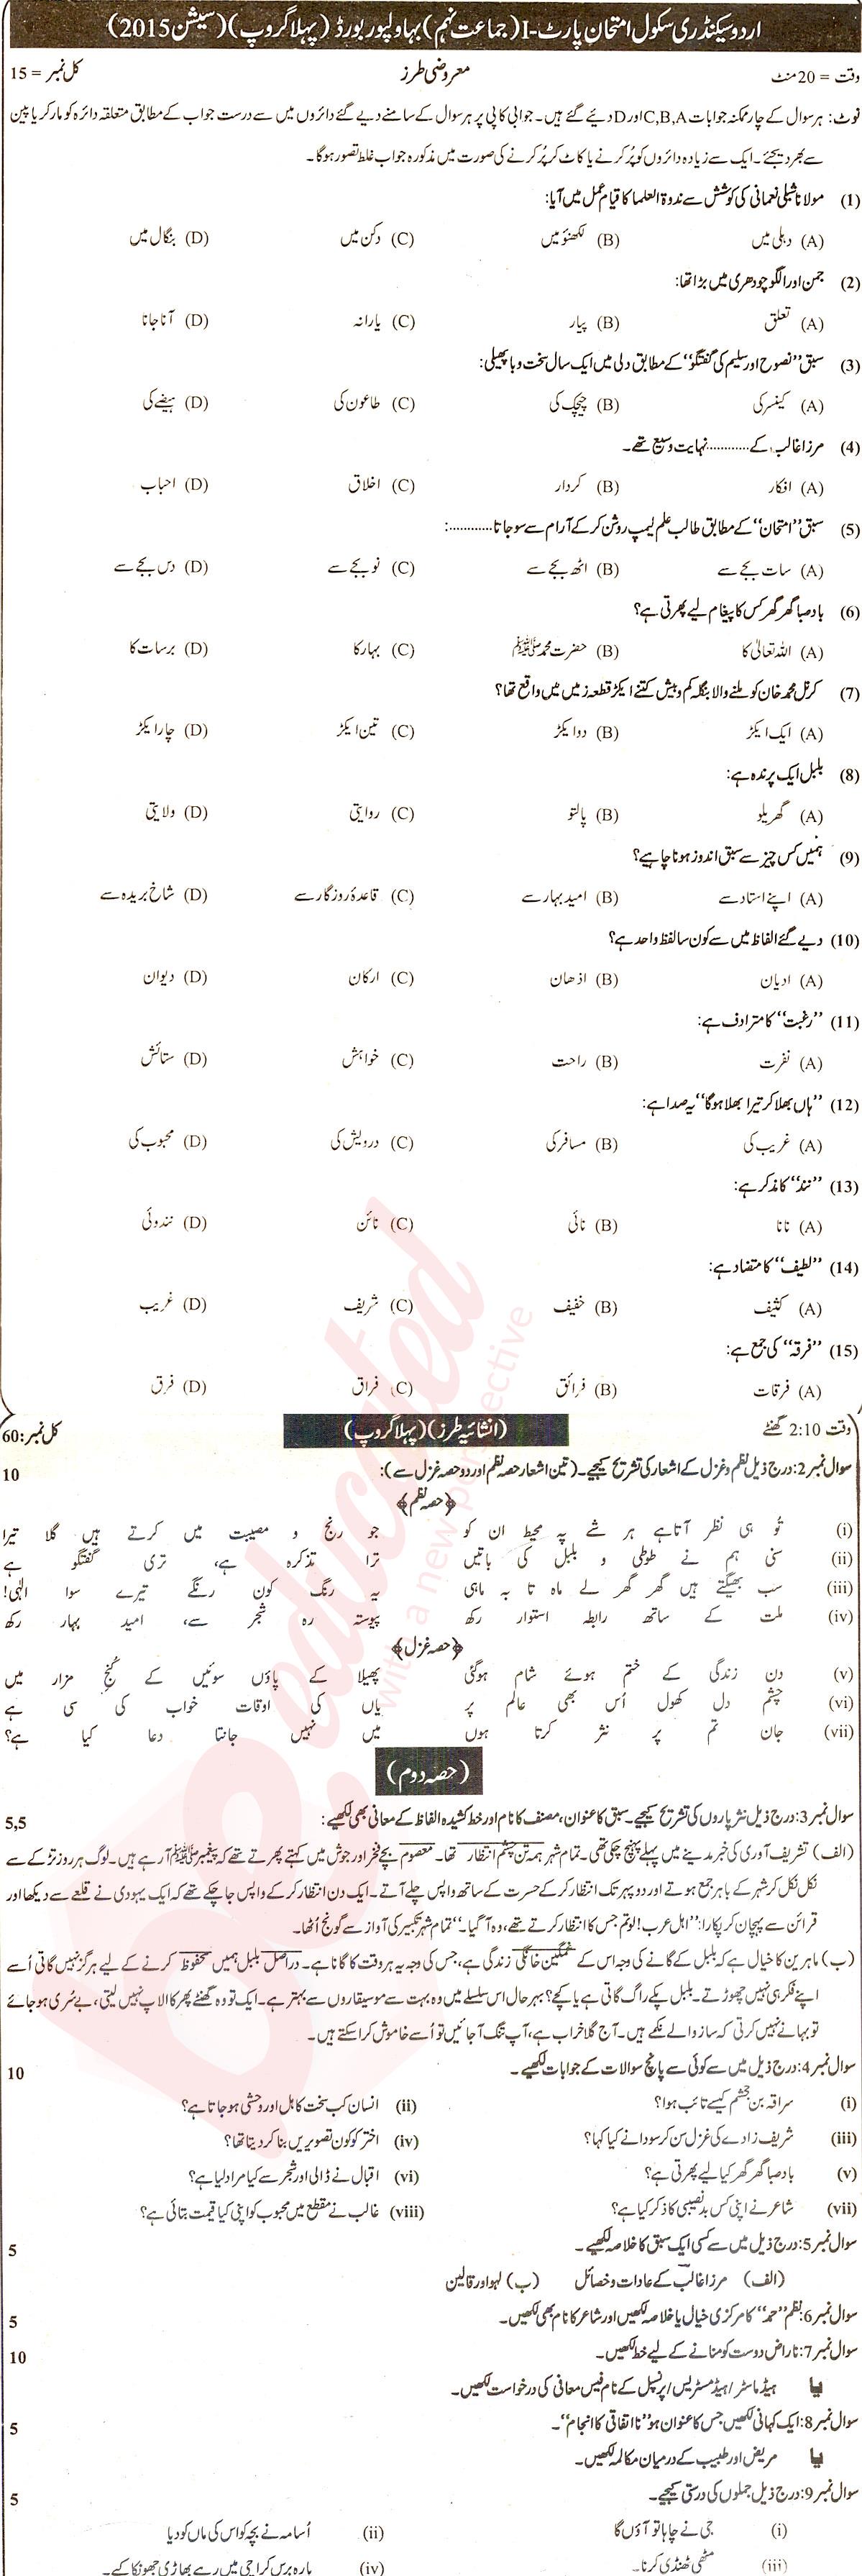 Urdu 9th class Past Paper Group 1 BISE Bahawalpur 2015